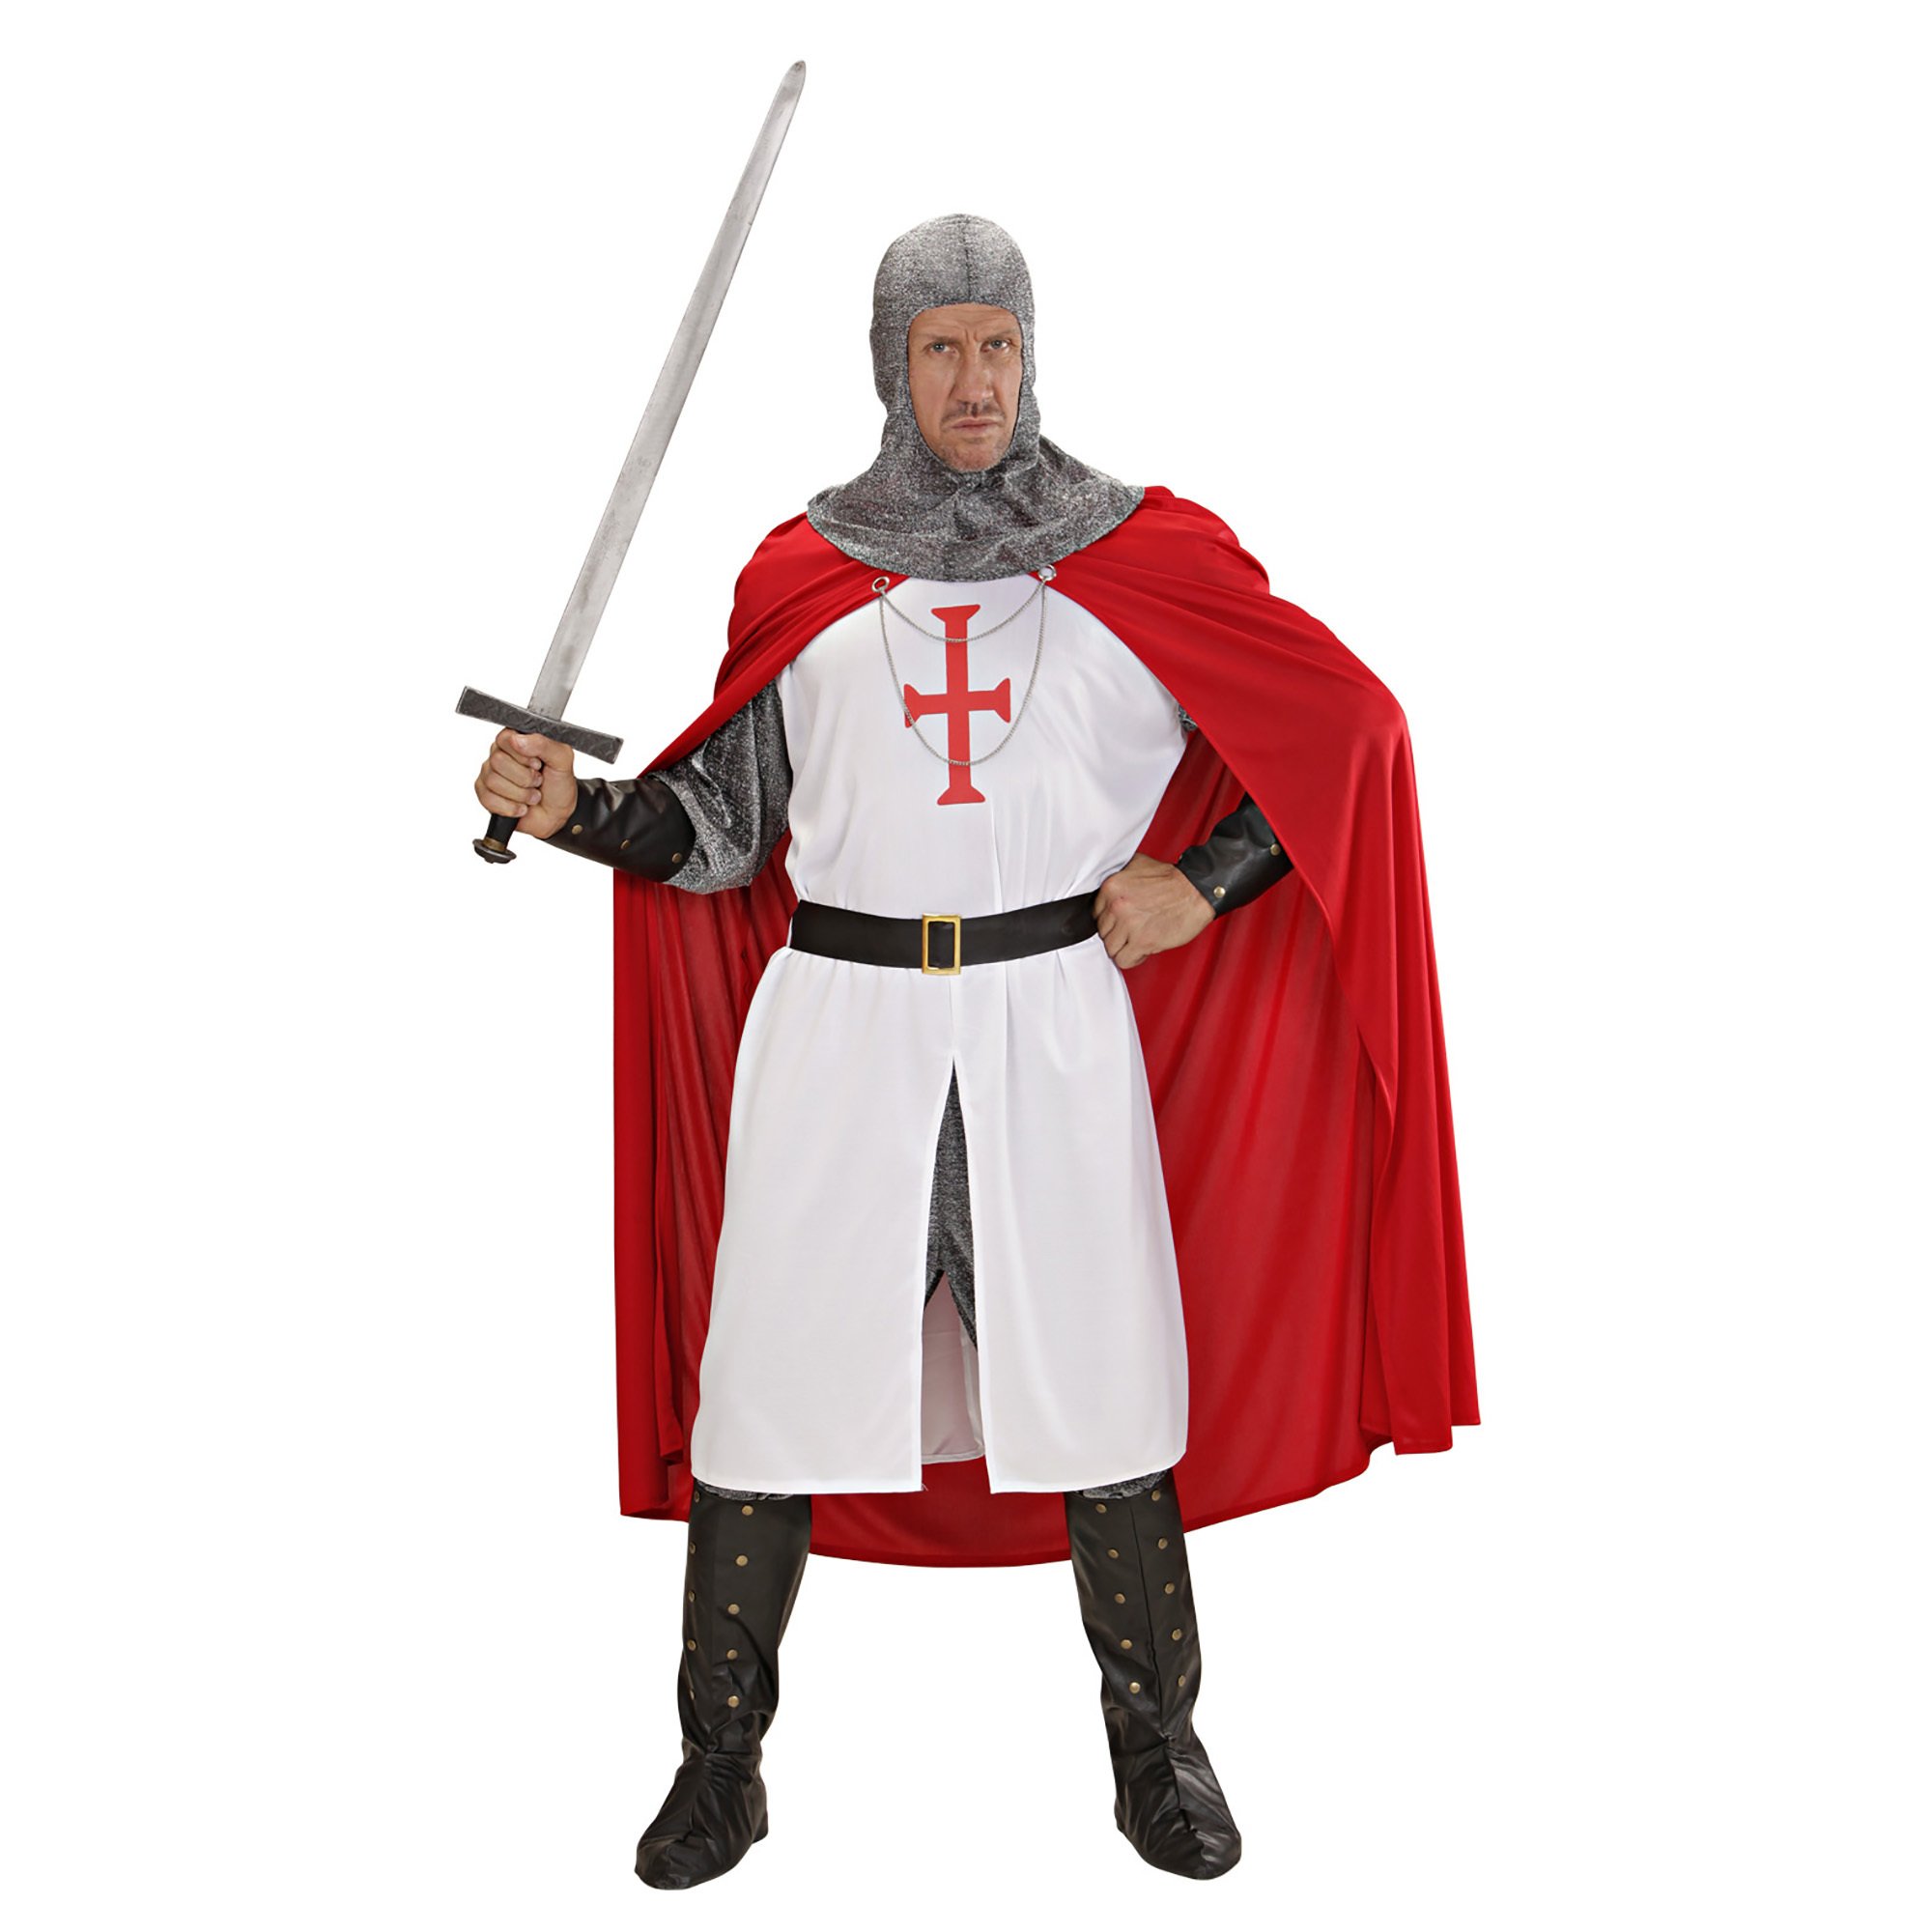 tetraëder Mechanisch Religieus Middeleeuwse kruisridder ridder kostuum volwassen